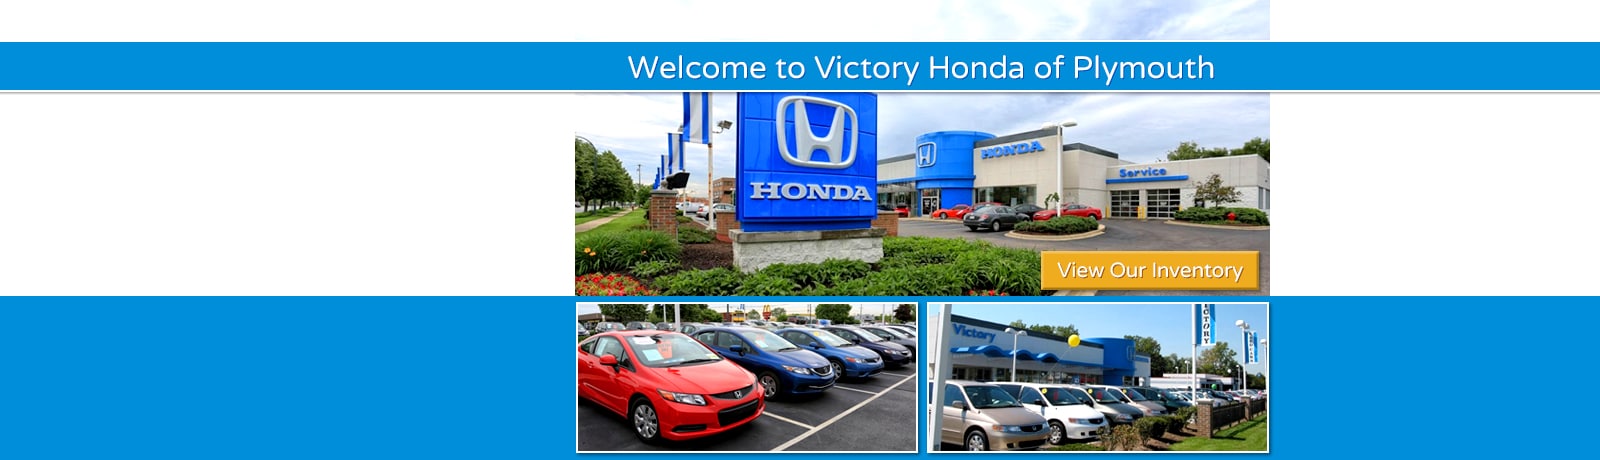 Honda dealerships in novi michigan #5